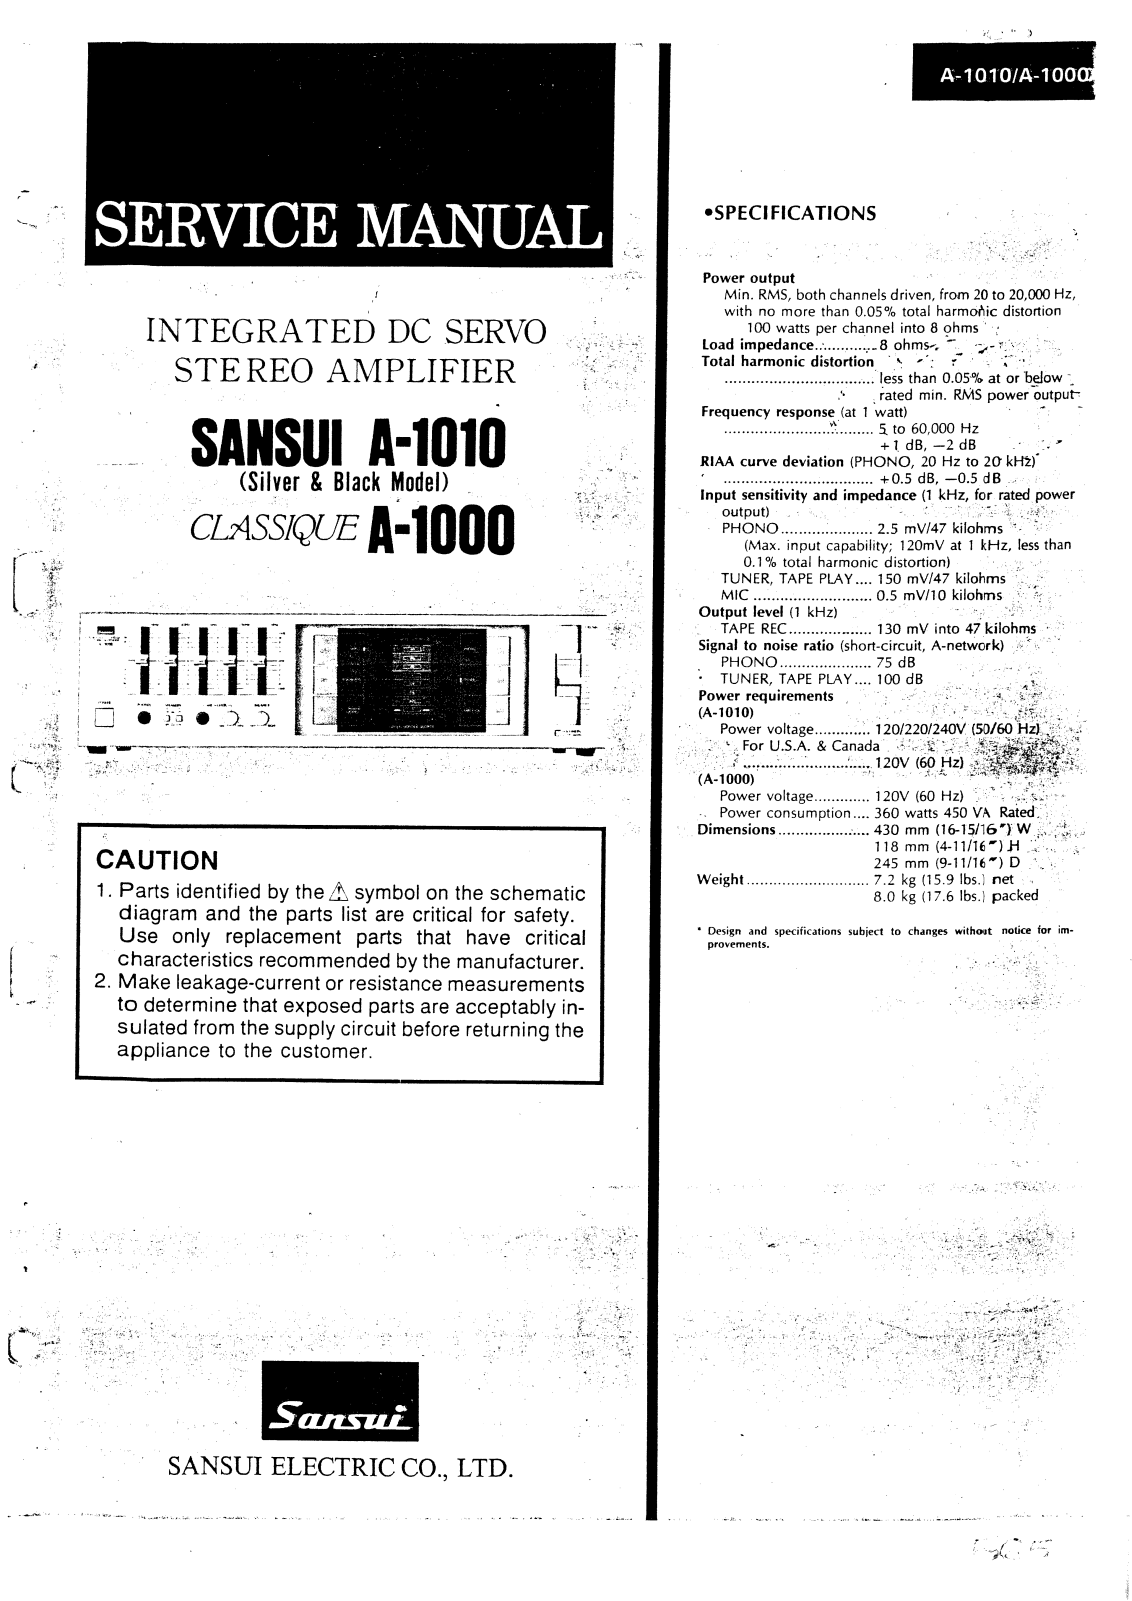 Sansui A-1000, A-1010 Service Manual